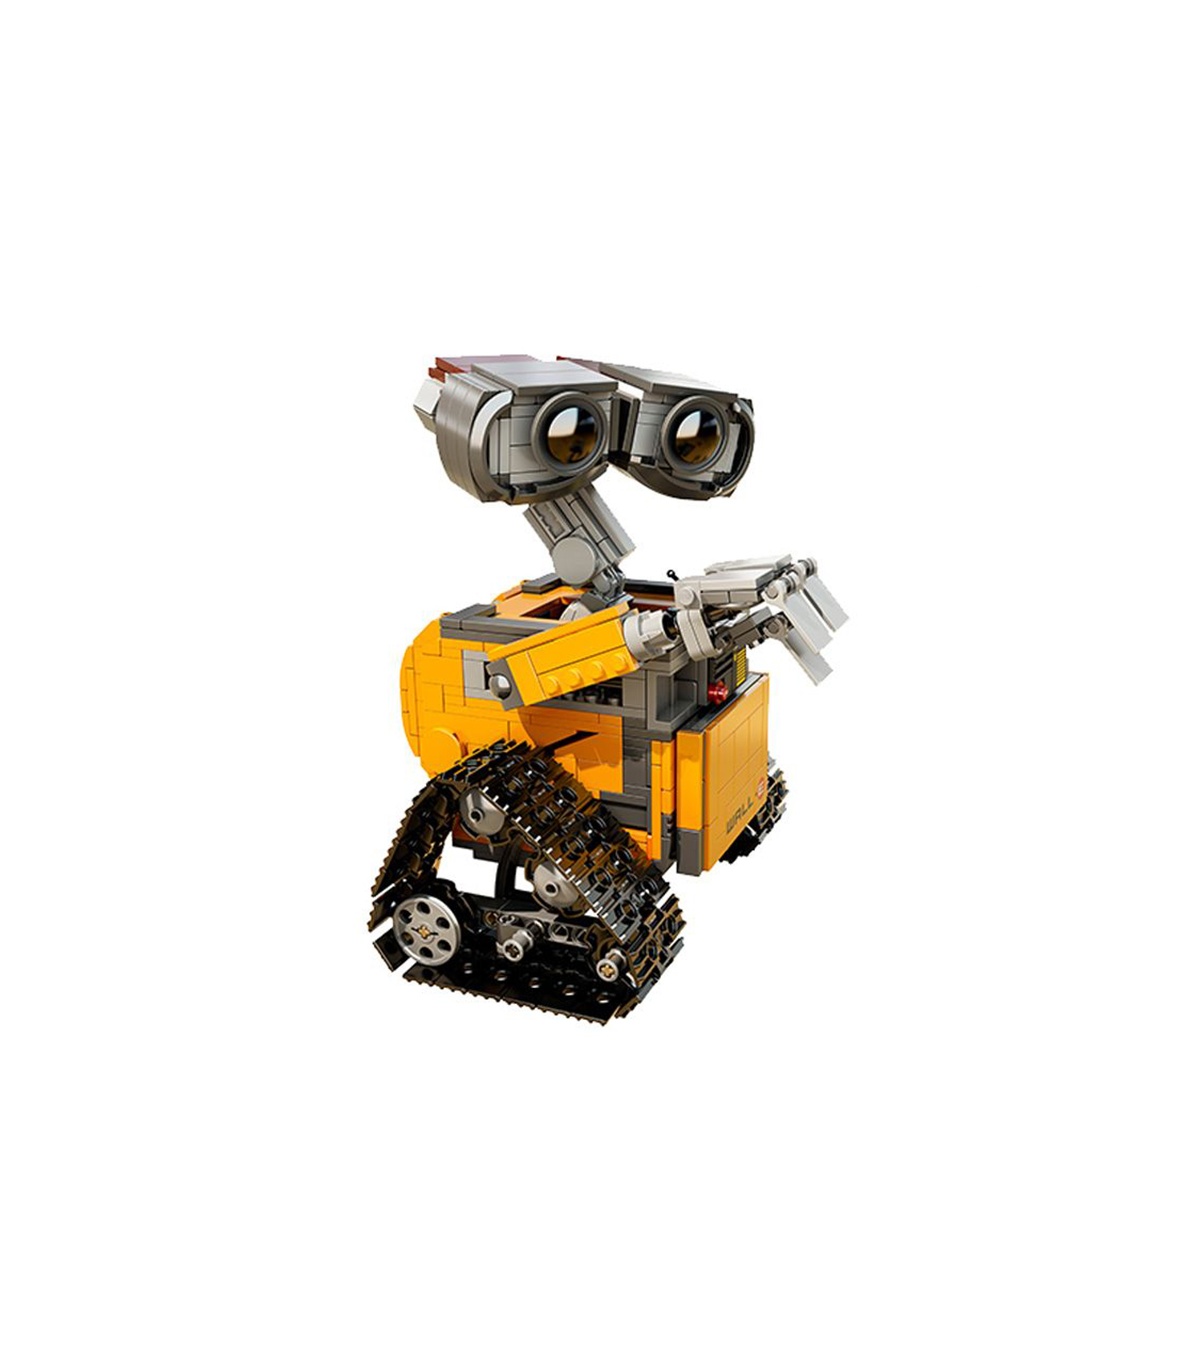 Creator Series Idea Robot Wall E Compatible Montado Buildi 